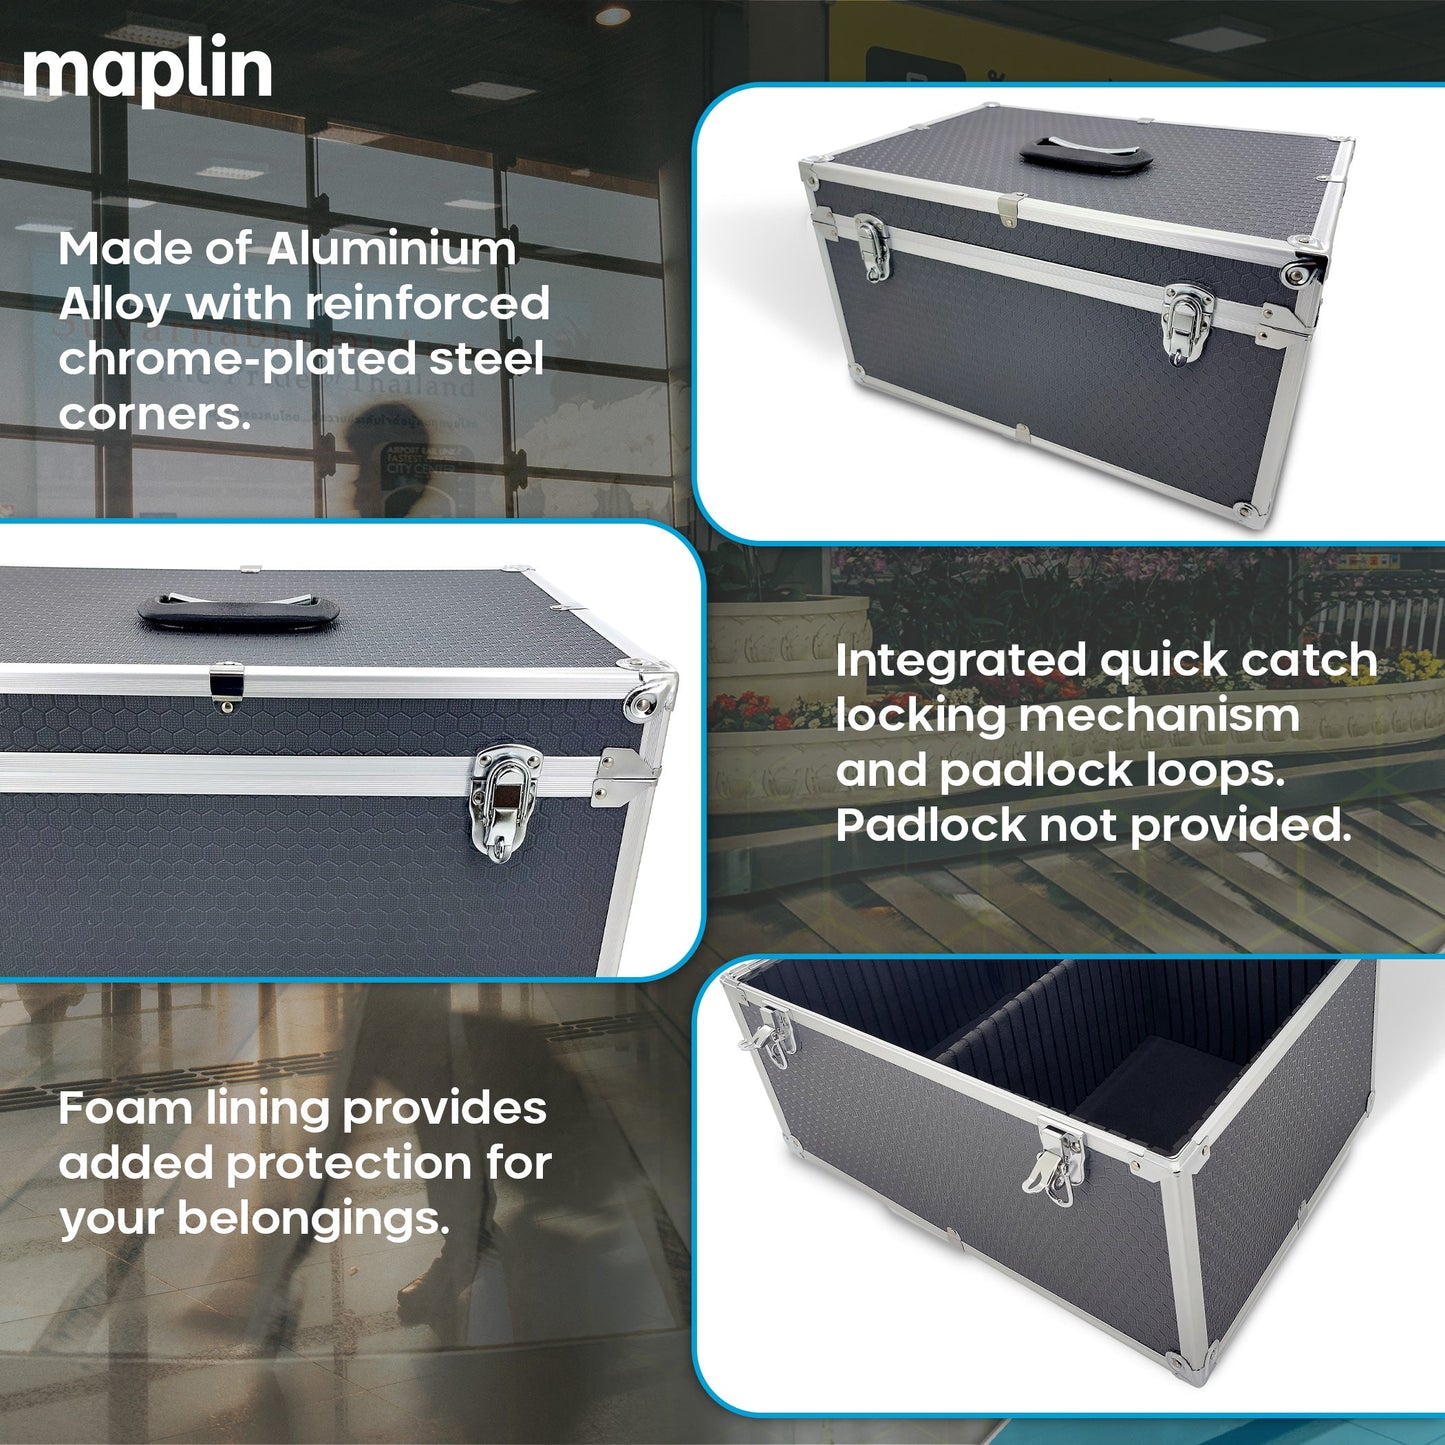 Maplin Plus Aluminium 240 x 450 x 310mm Flight Case with Internal Divider - Grey - maplin.co.uk